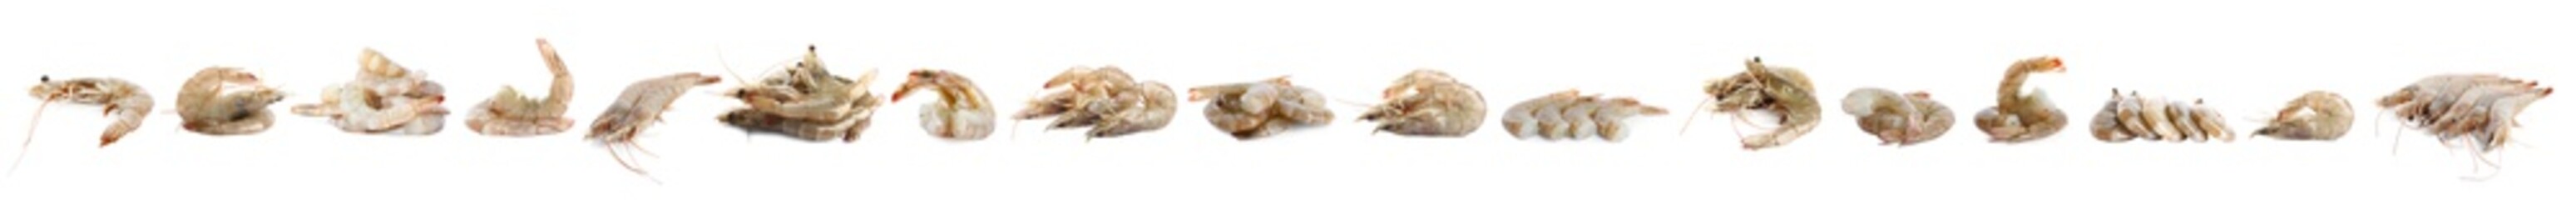 Set of fresh raw shrimps on white background. Banner design